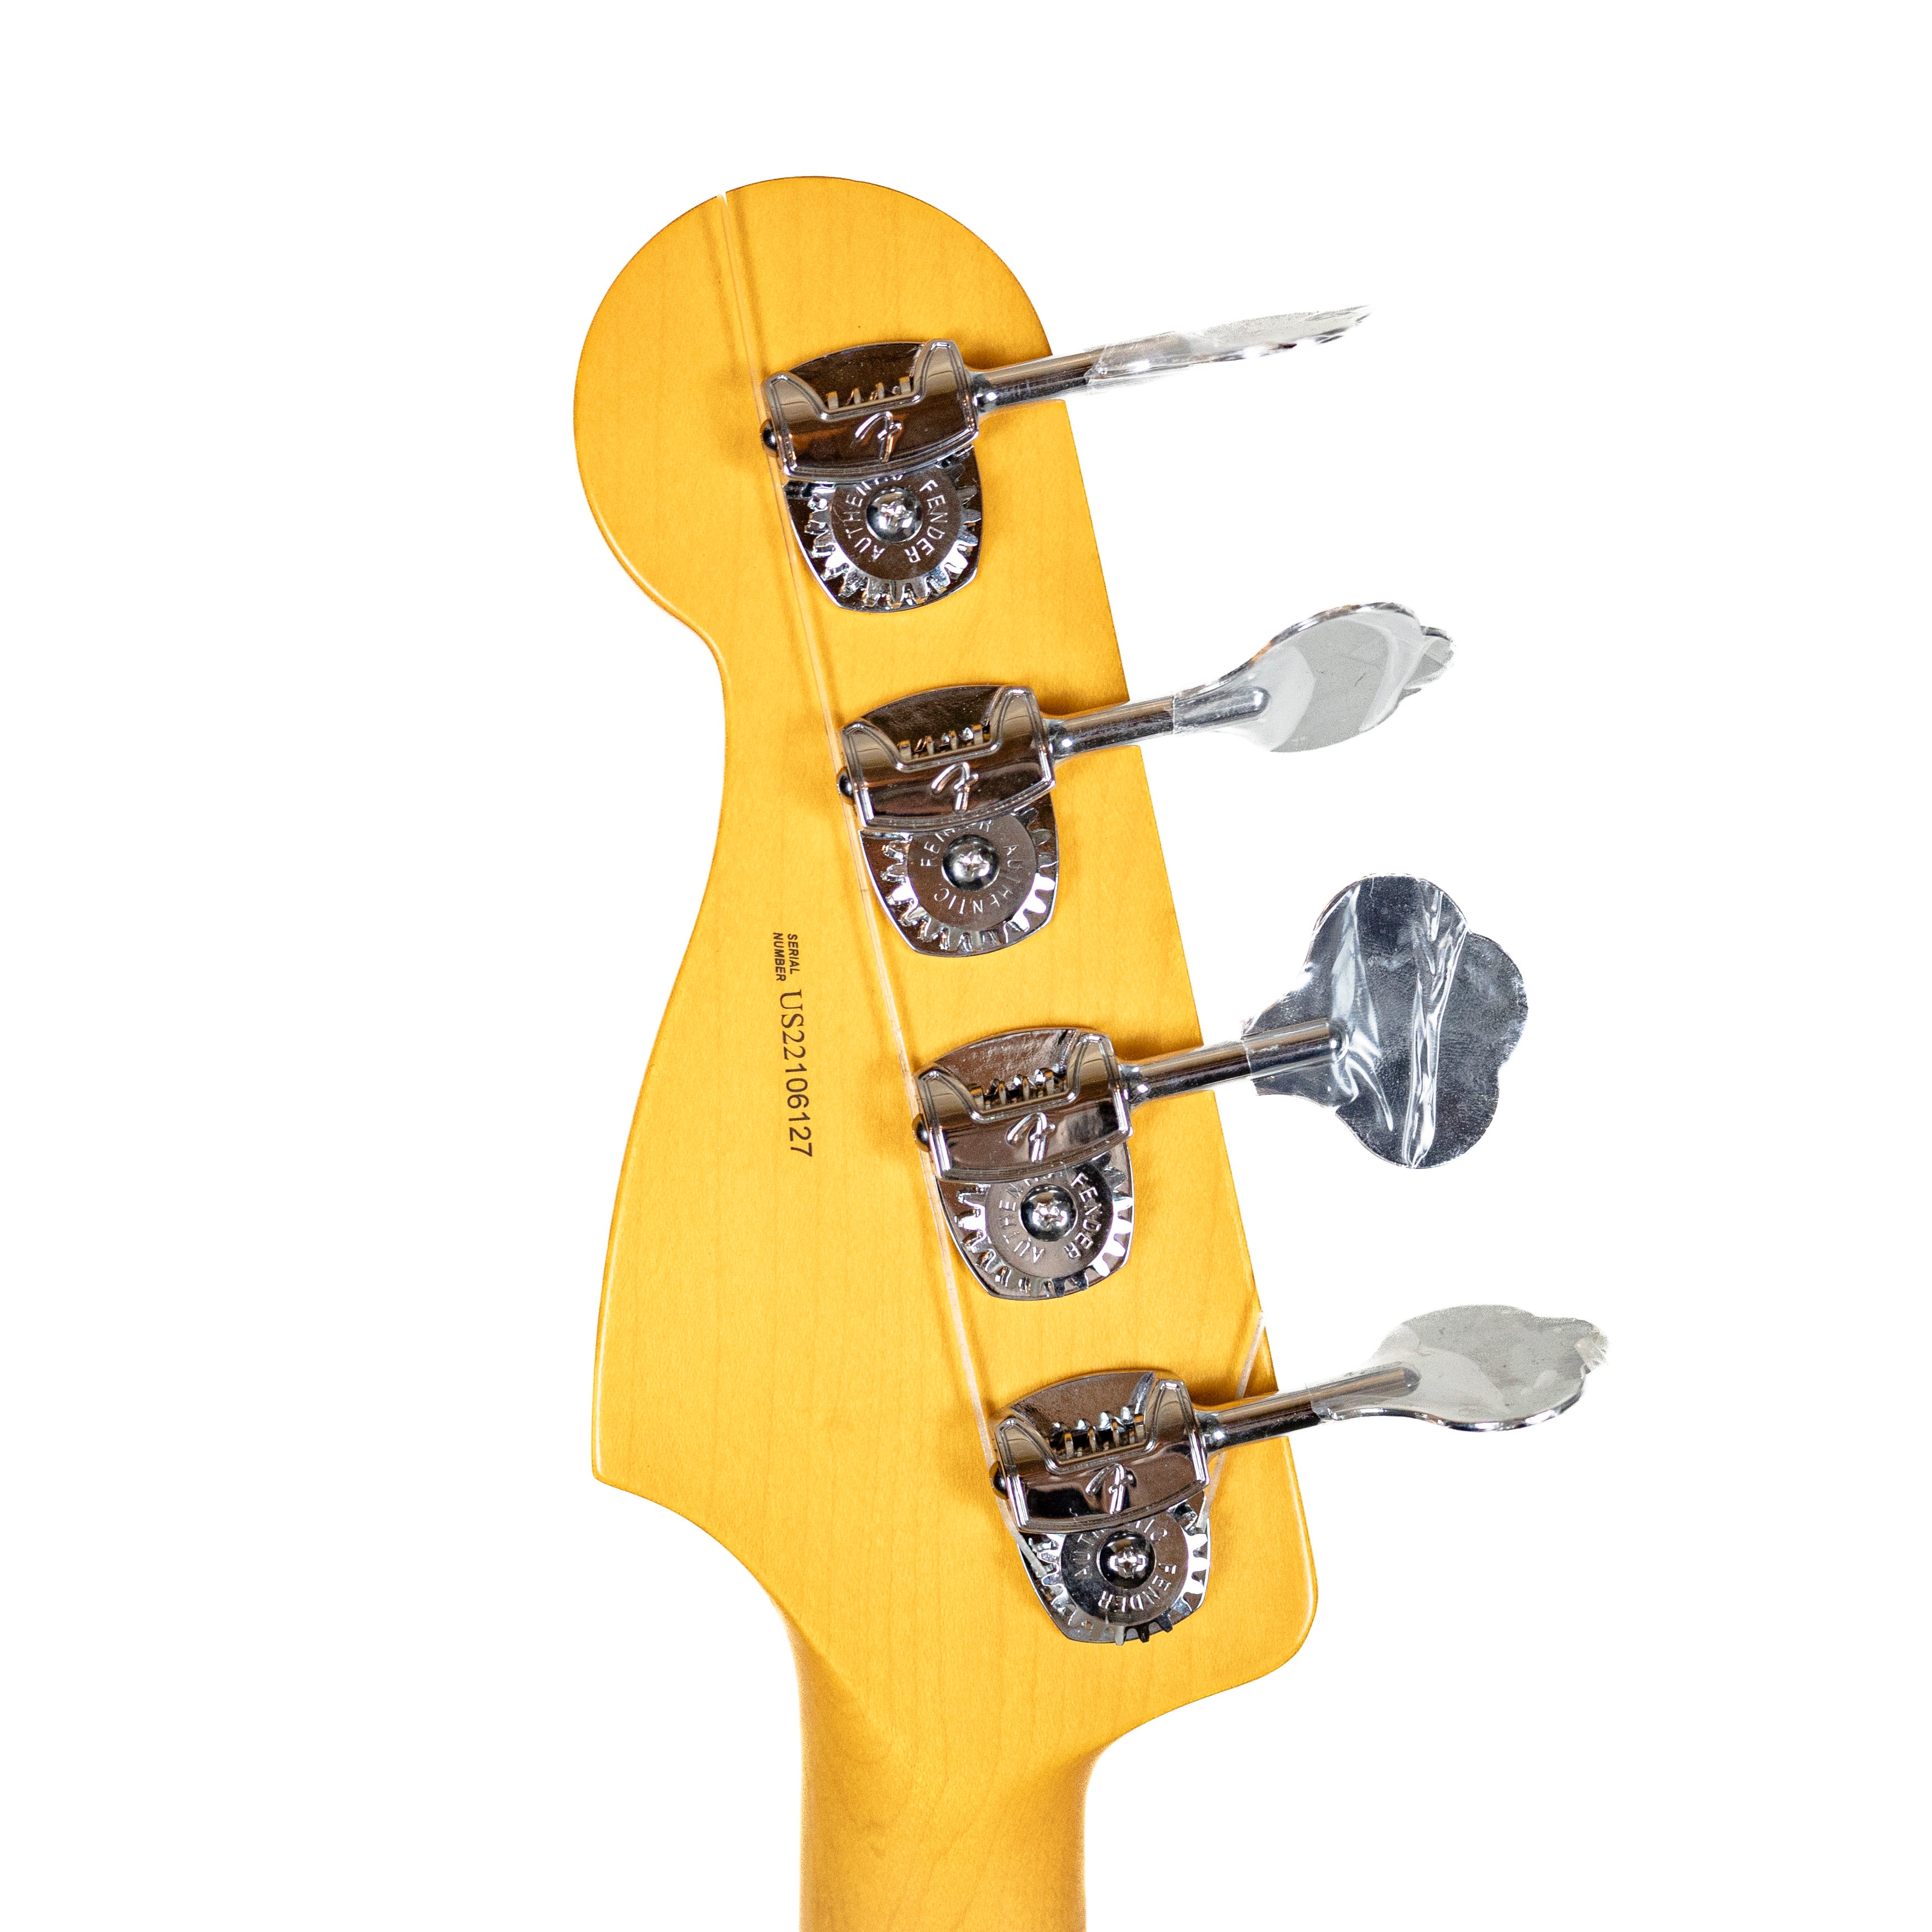 Fender American Professional II Precision Bass Black